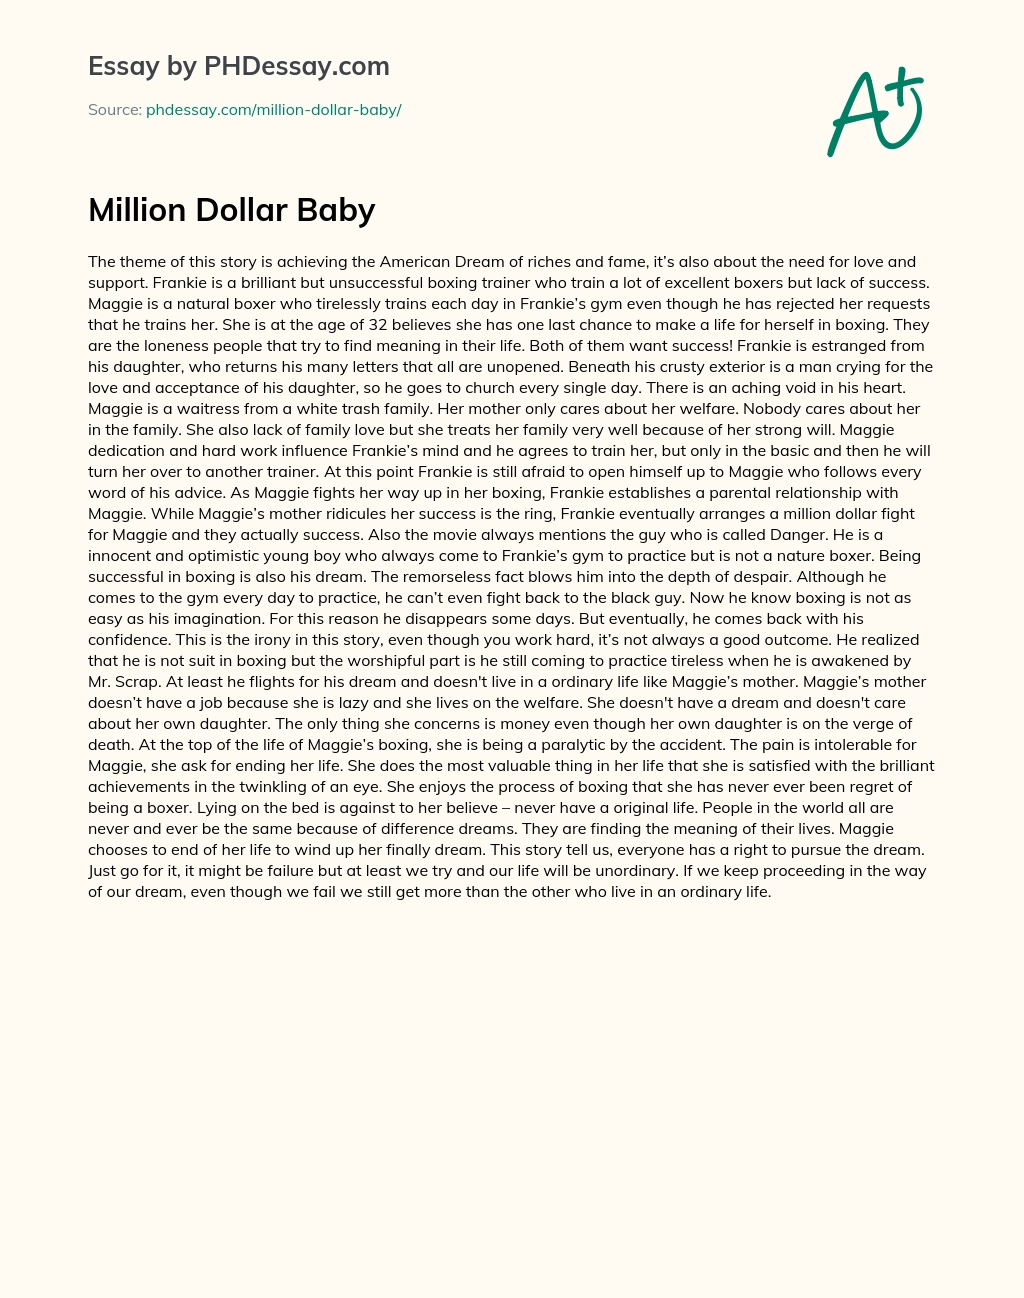 Million Dollar Baby essay